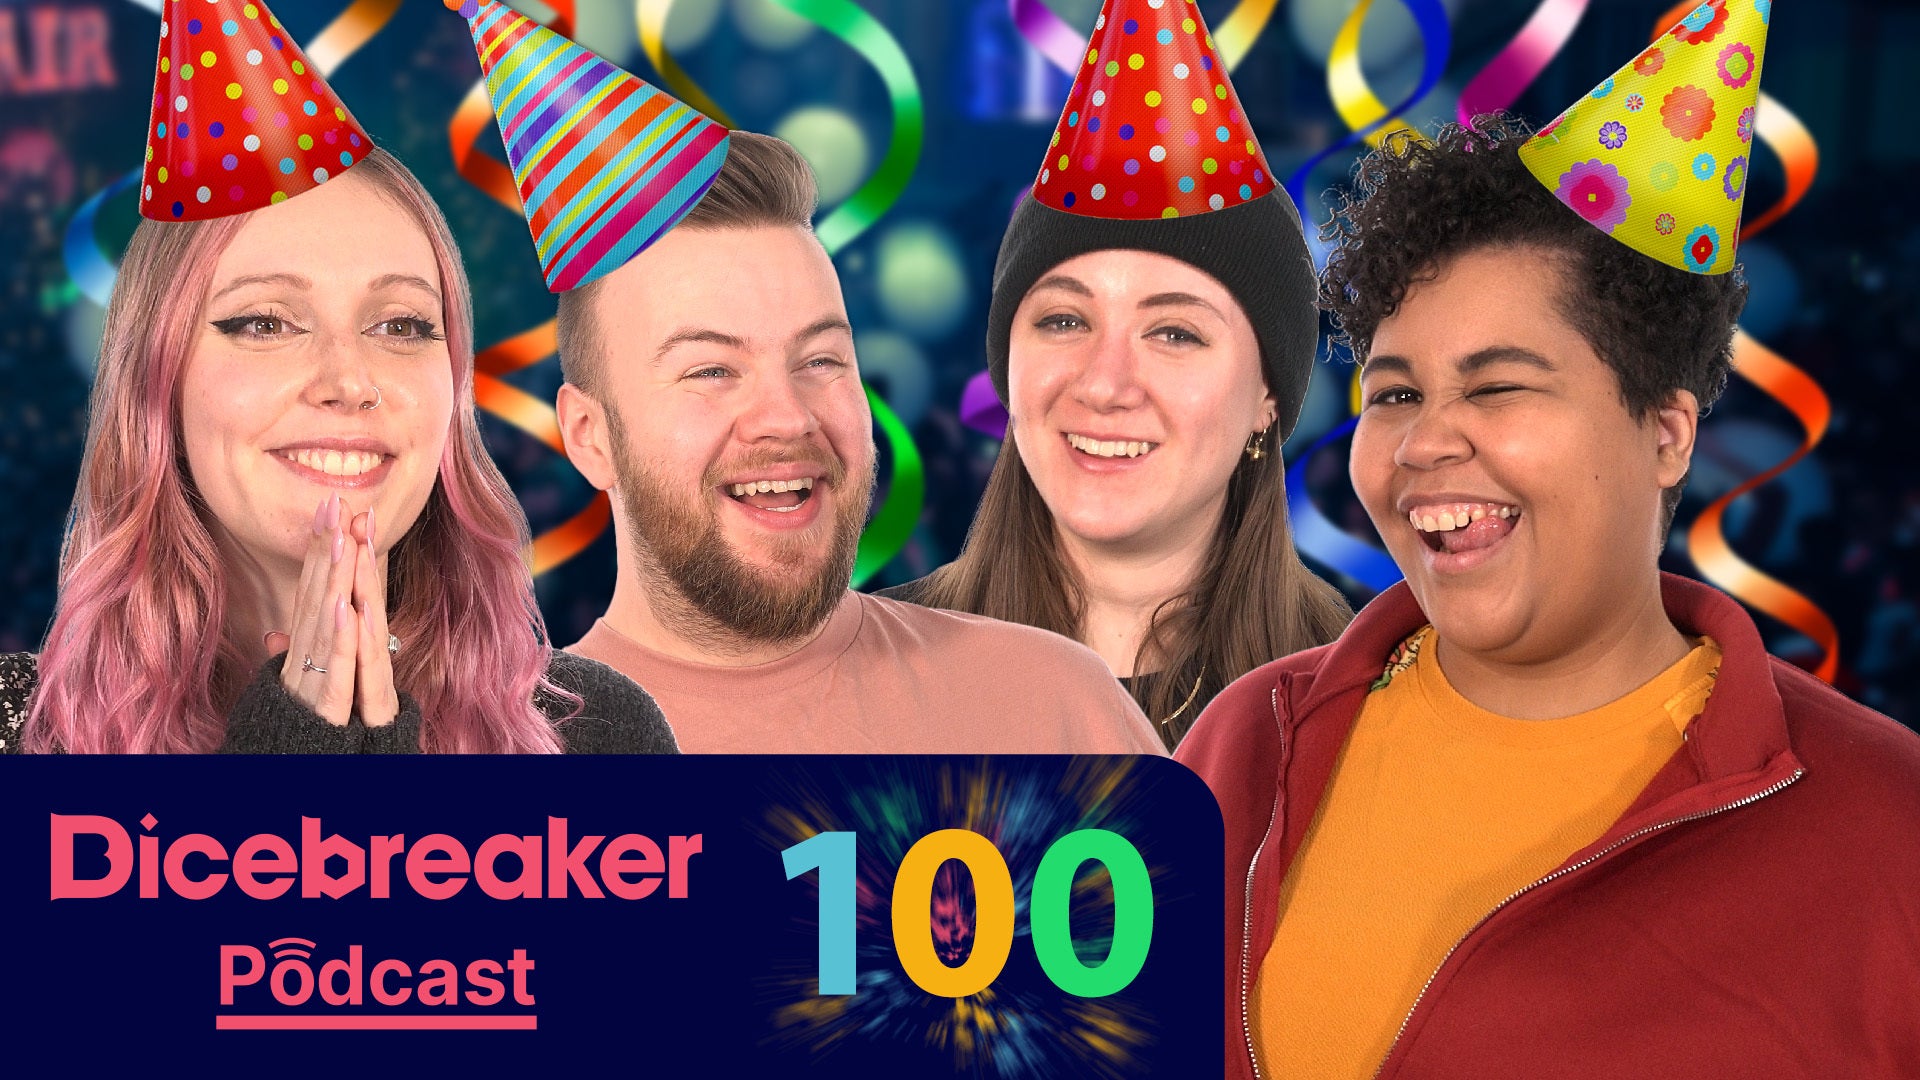 Dicebreaker podcast 100 episode